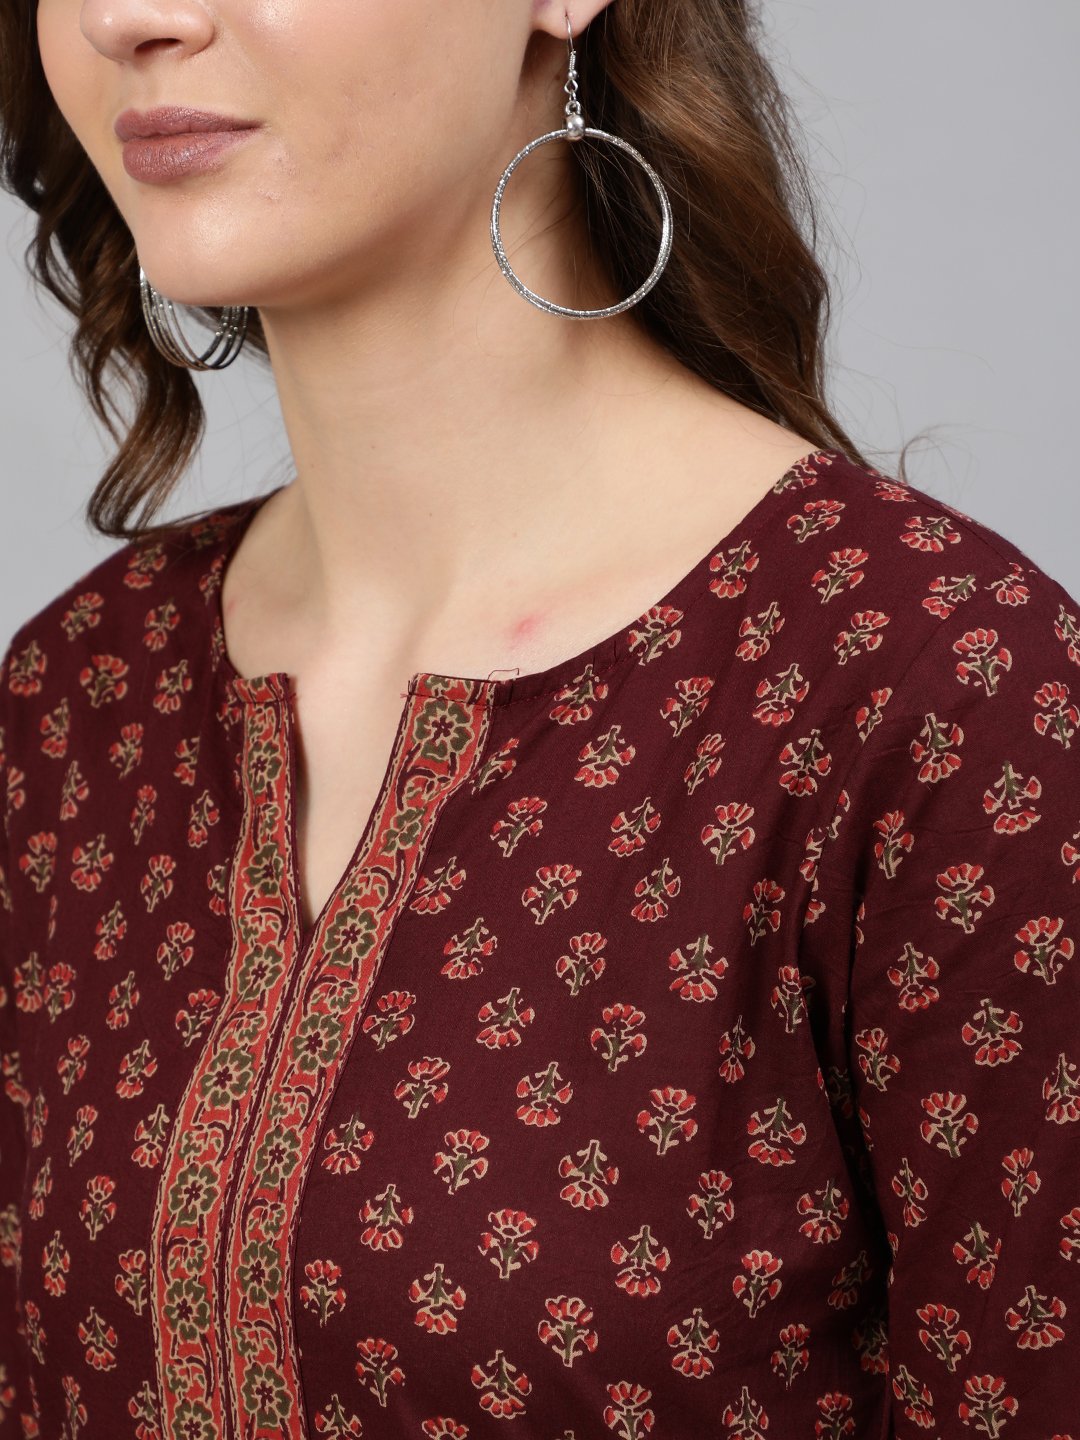 Women's Burgundy Printed Tunic With Three Quarter Sleeves - Nayo Clothing USA